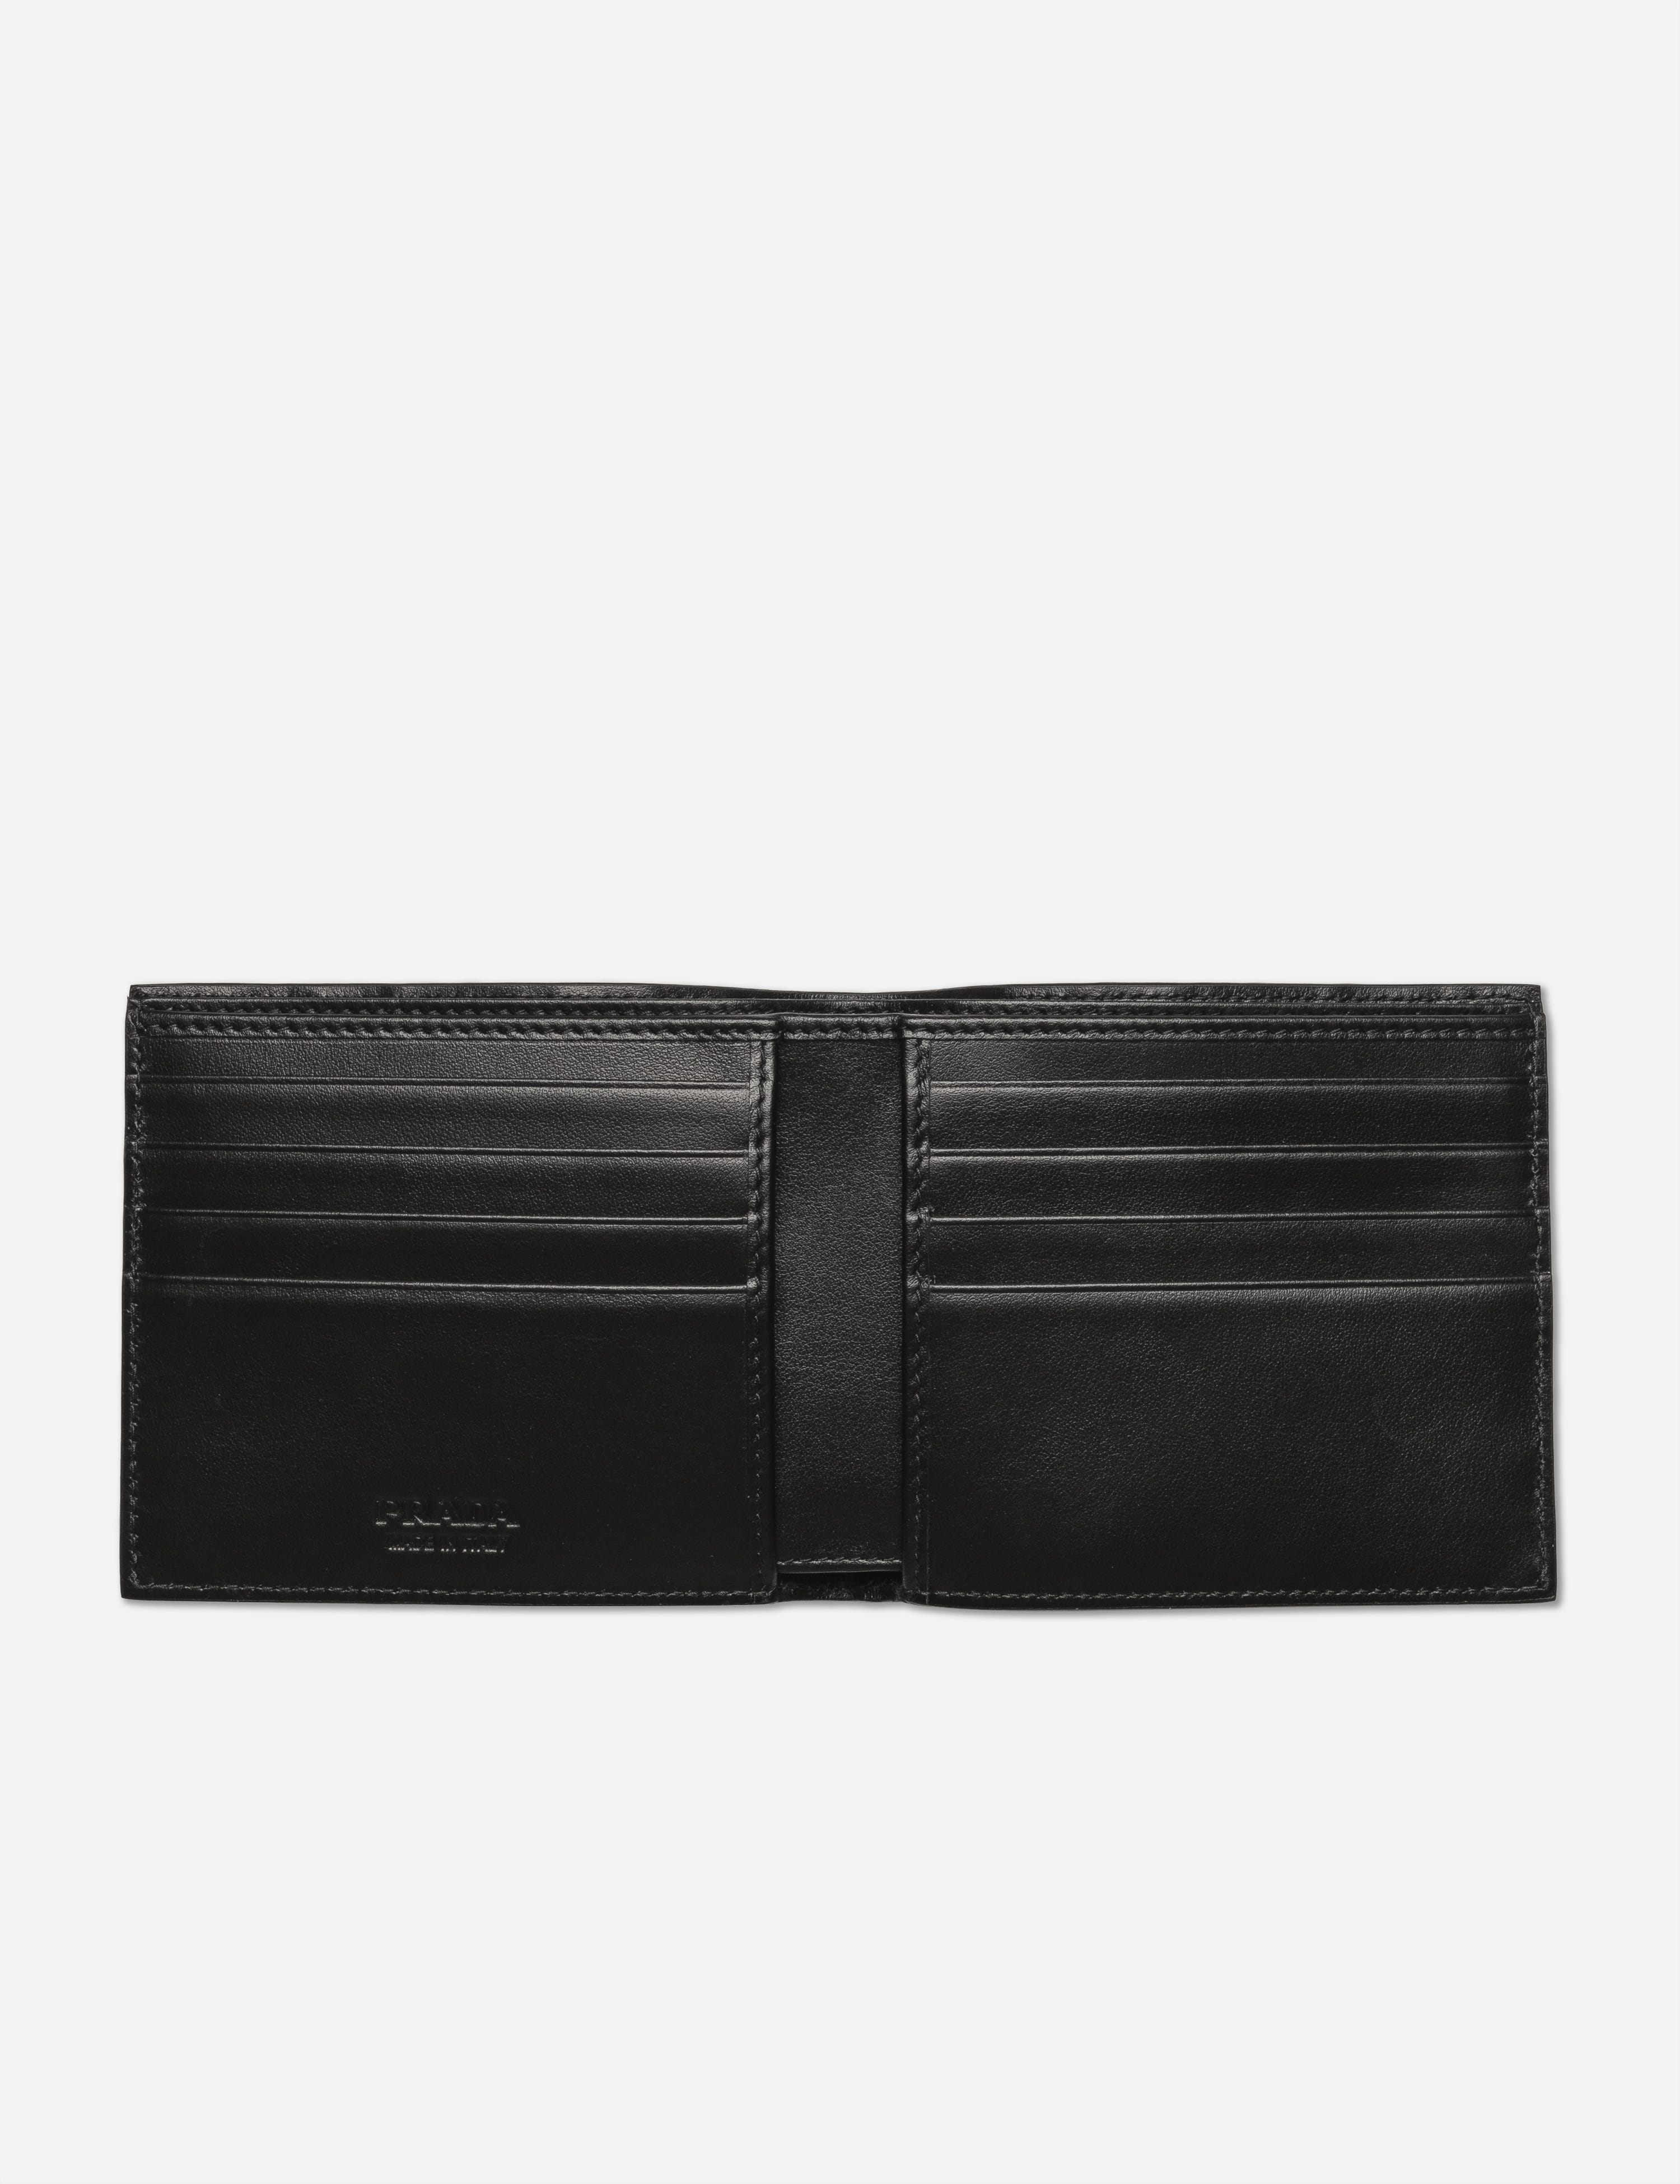 Buy Adamis Blue Colour Pure Leather Wallet for Men (W325) Online